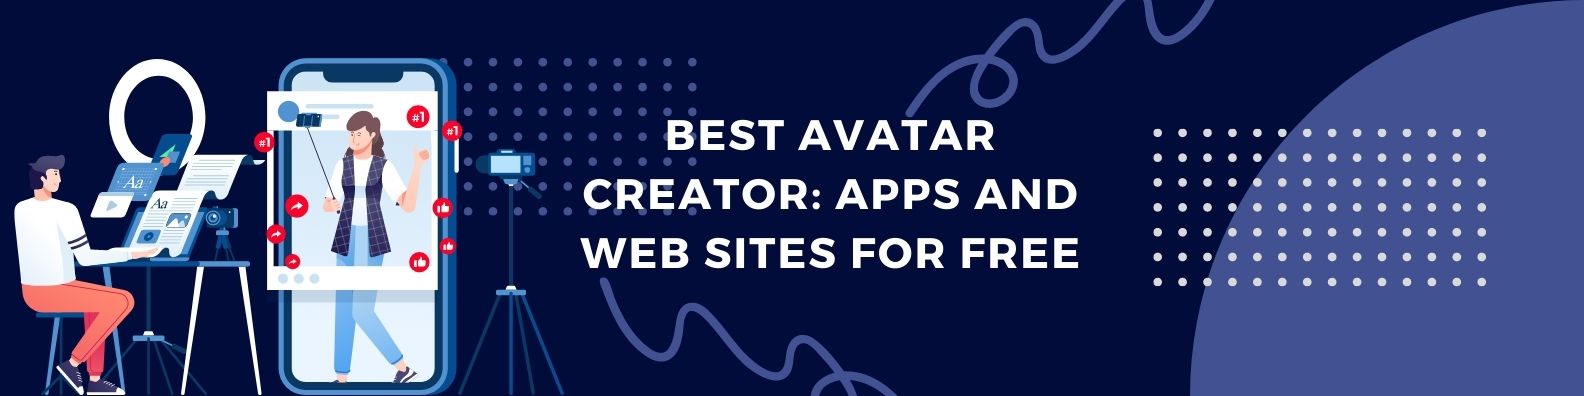 Best Avatar Maker: Apps & Web Sites for Free